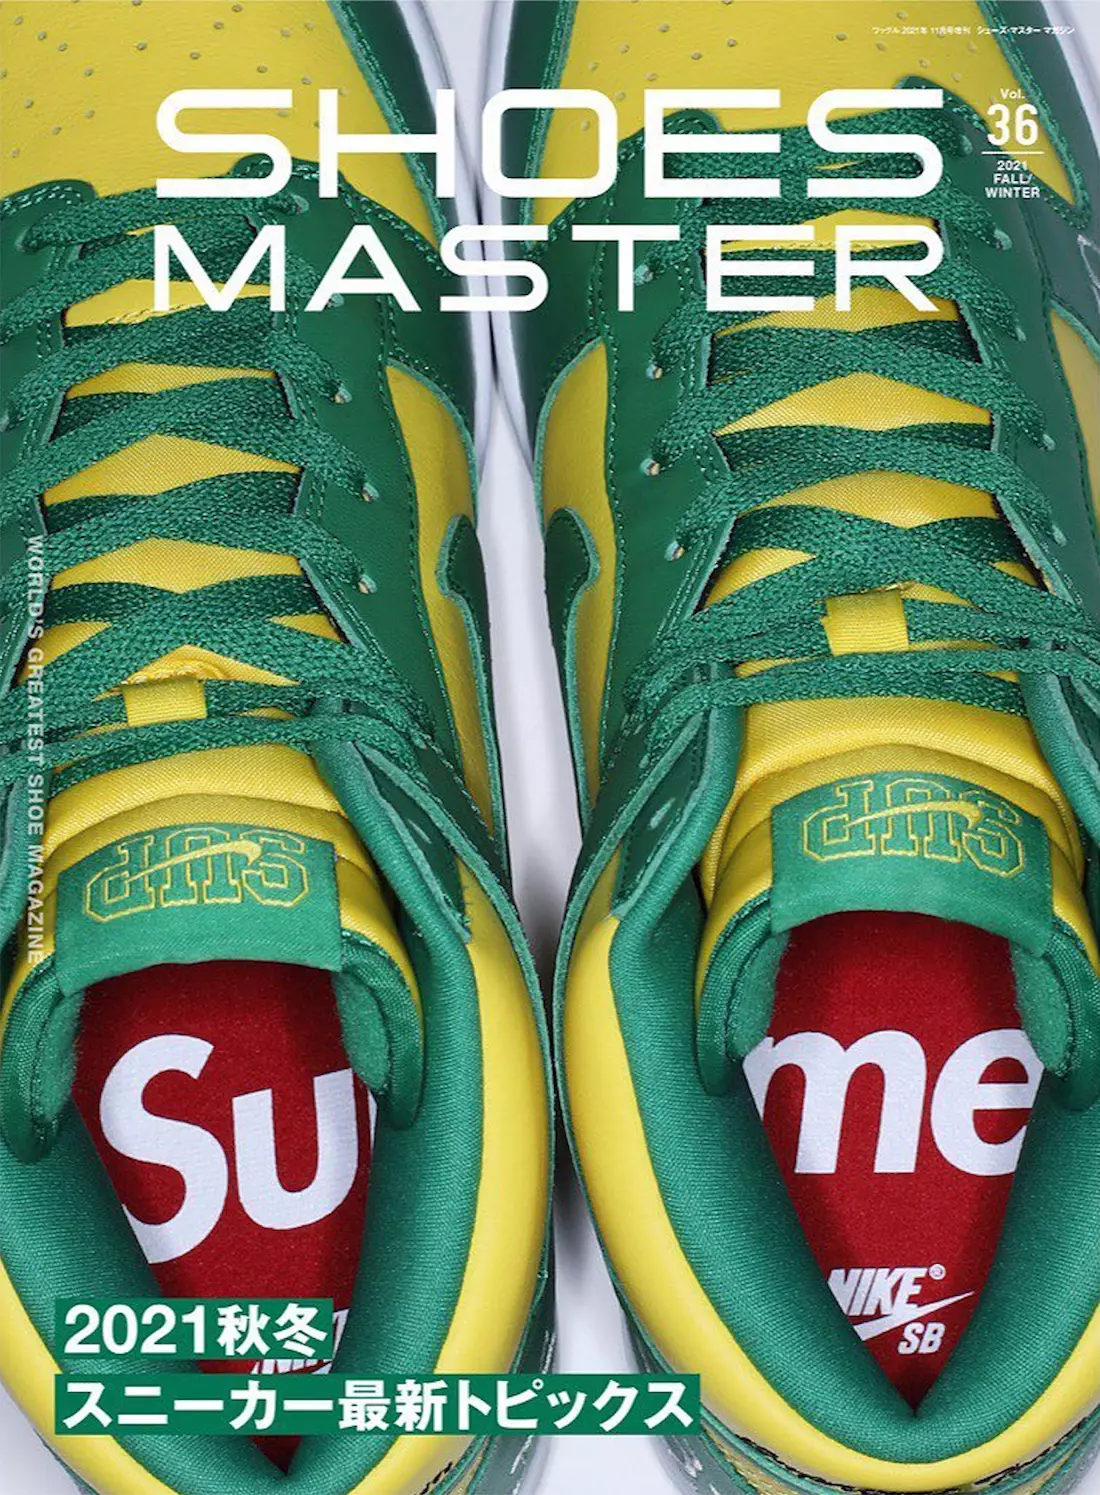 Supreme Nike SB Dunk High Brazil Yellow Green Megjelenés dátuma